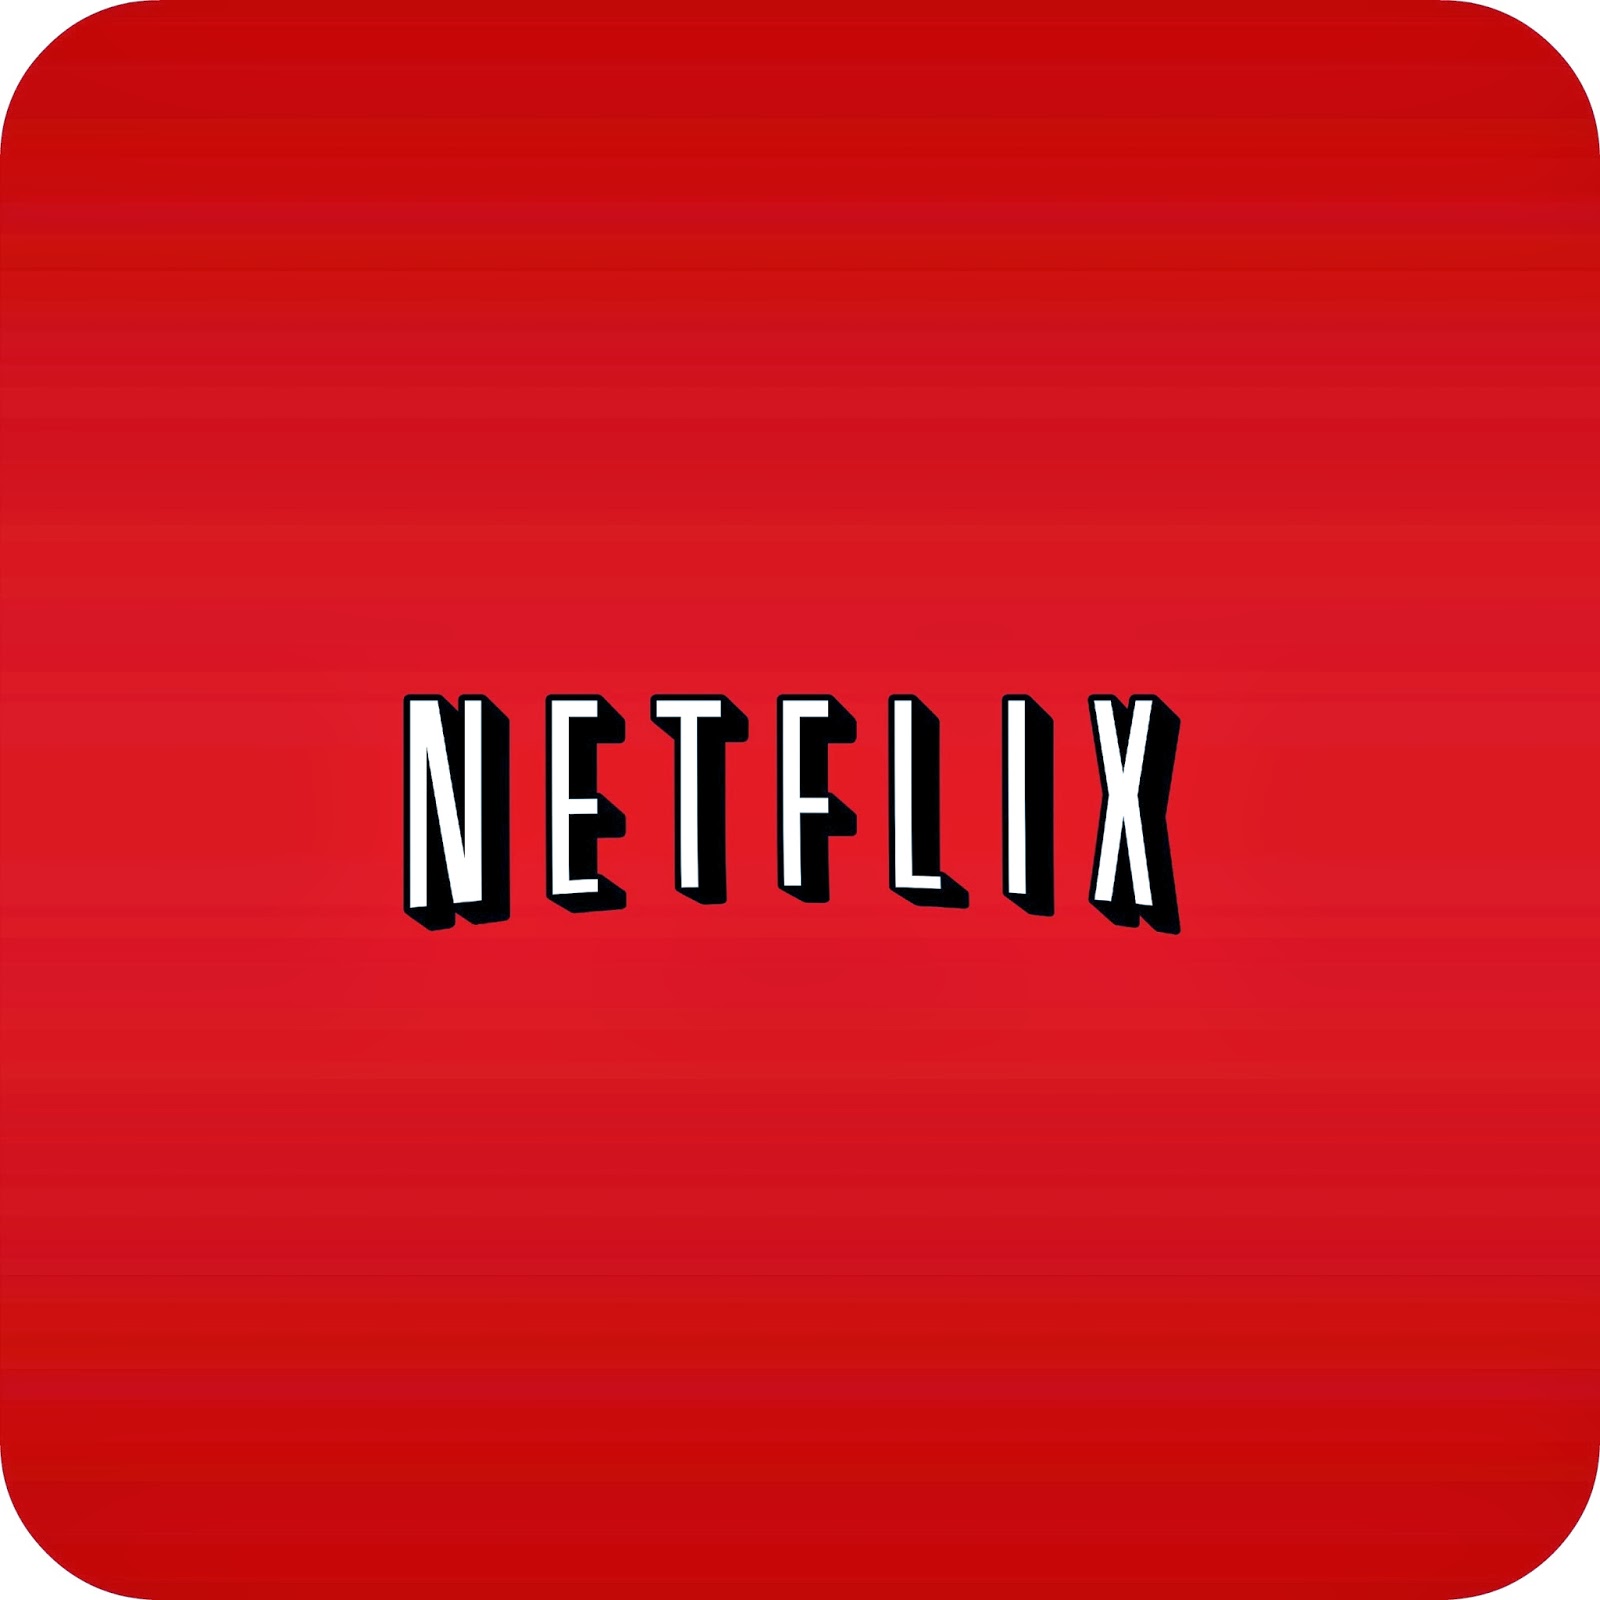 Life Unexpected: Netflix - #GetFitWithNetflix